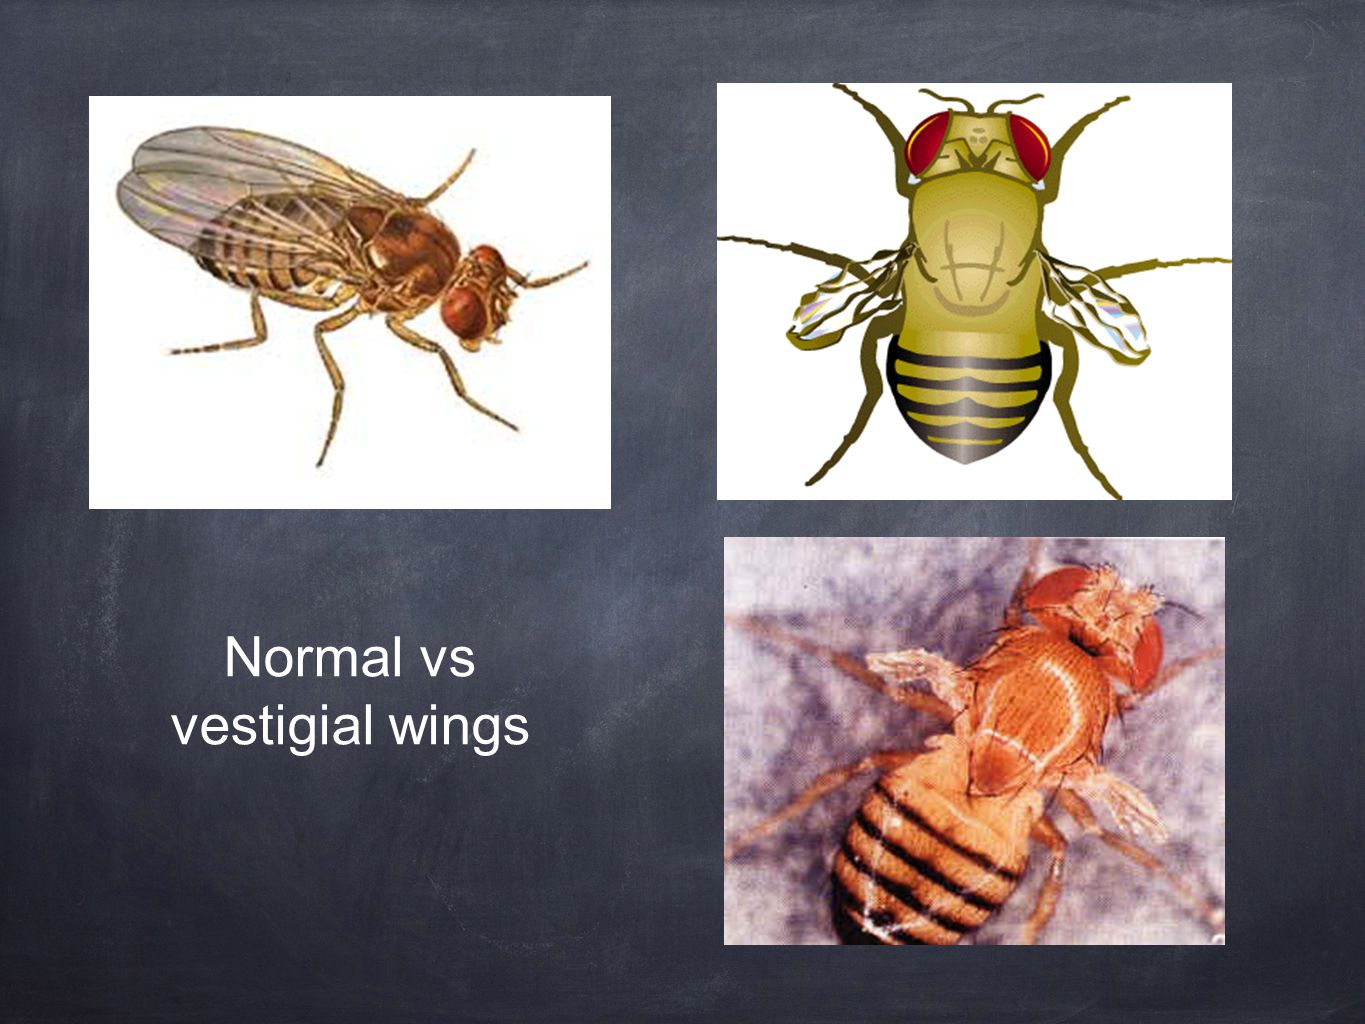 Normal vs vestigial wings